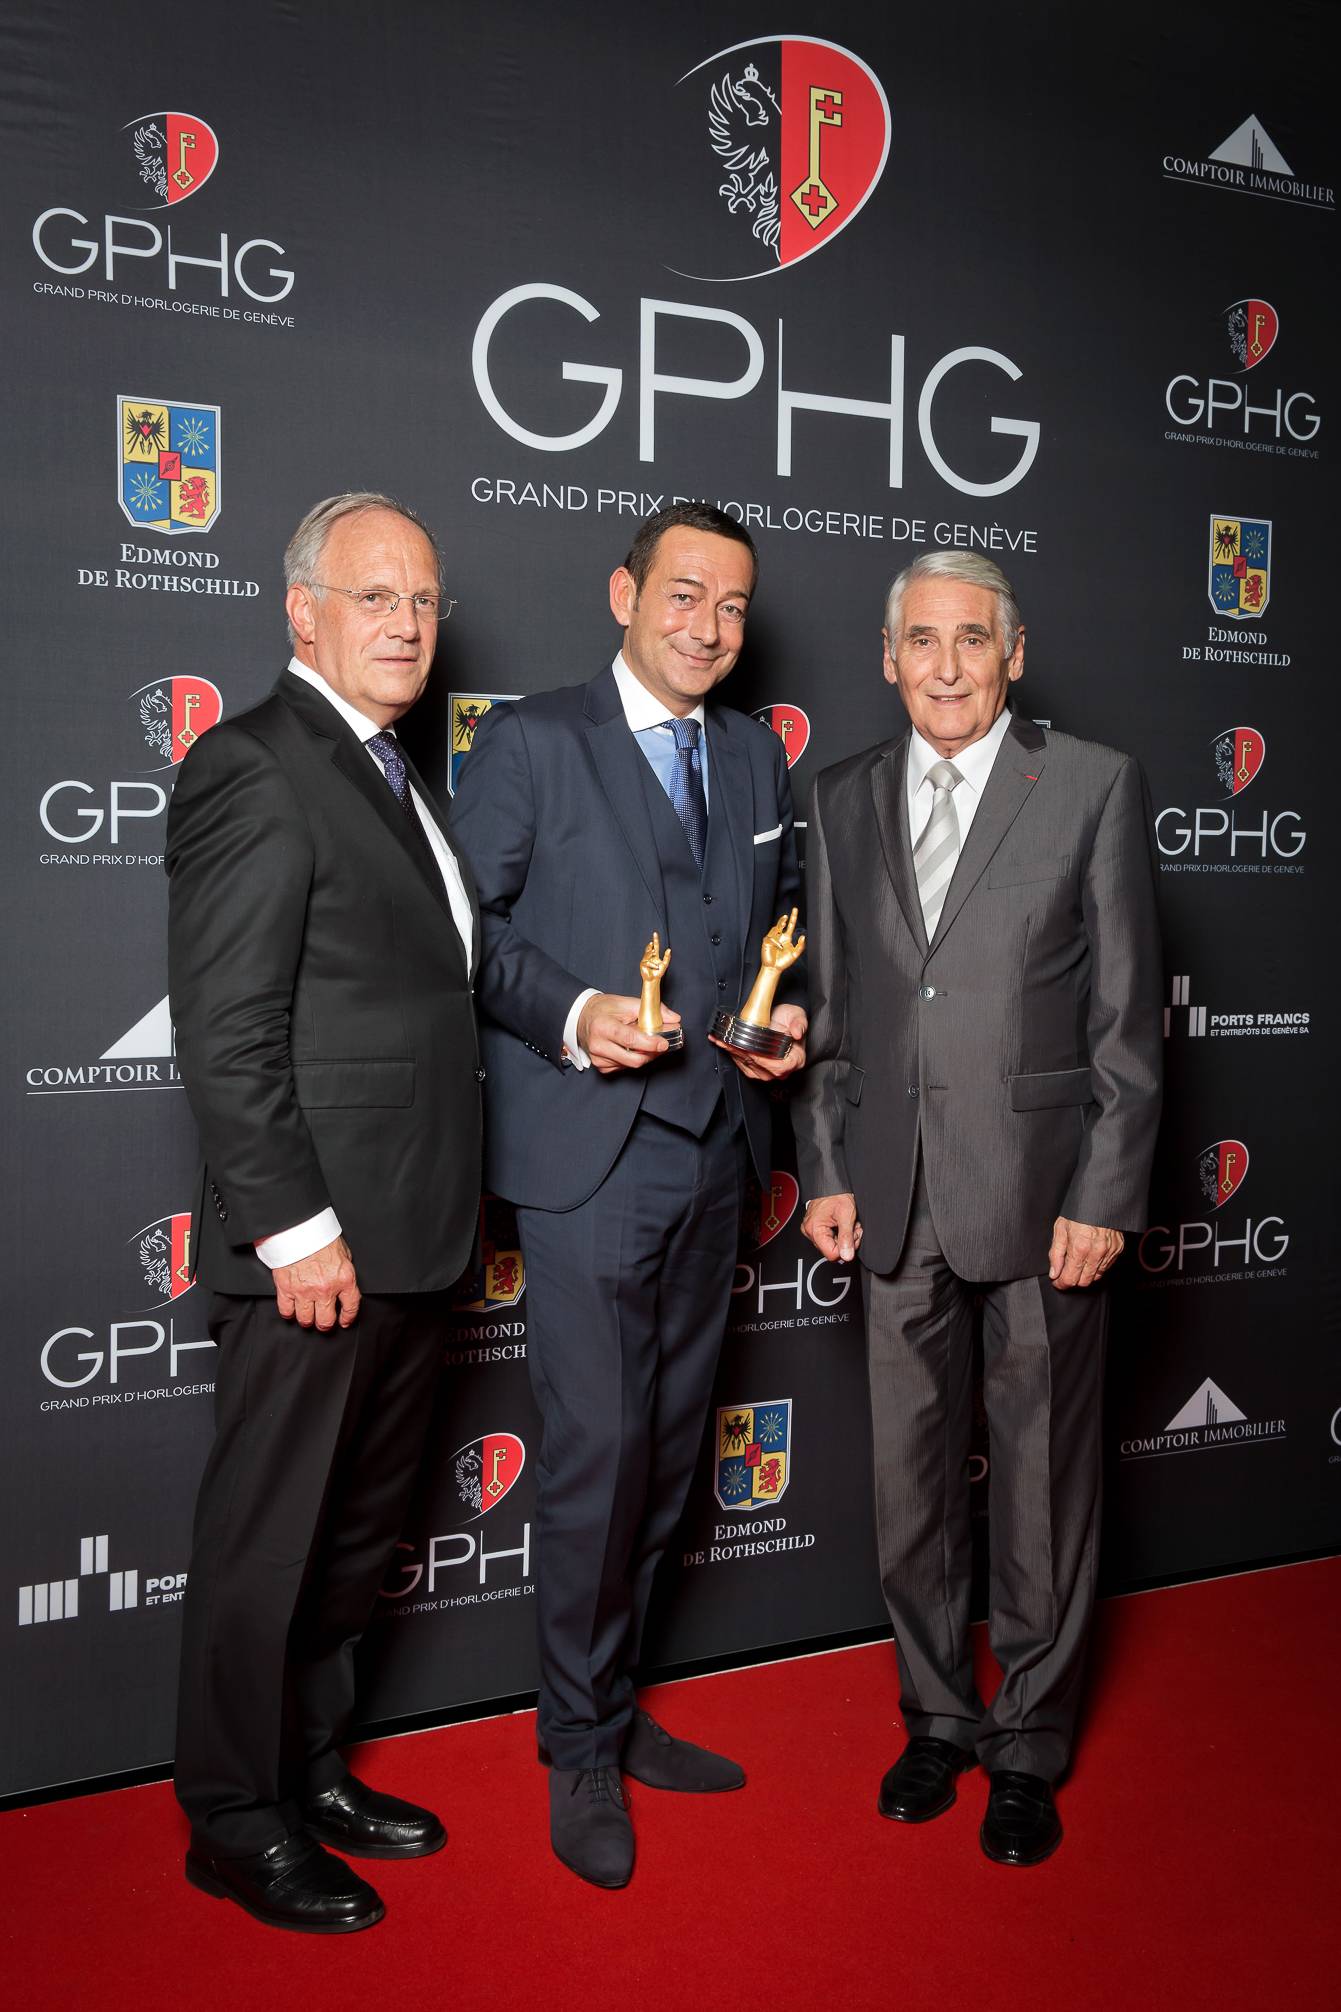 Johann Schneider-Ammann (Federal councillor), Jean-Charles Zufferey (Vice-president of Breguet, winner of the « Aiguille d’Or » Grand Prix 2014) and Carlo Lamprecht (President of the Foundation of the GPHG)